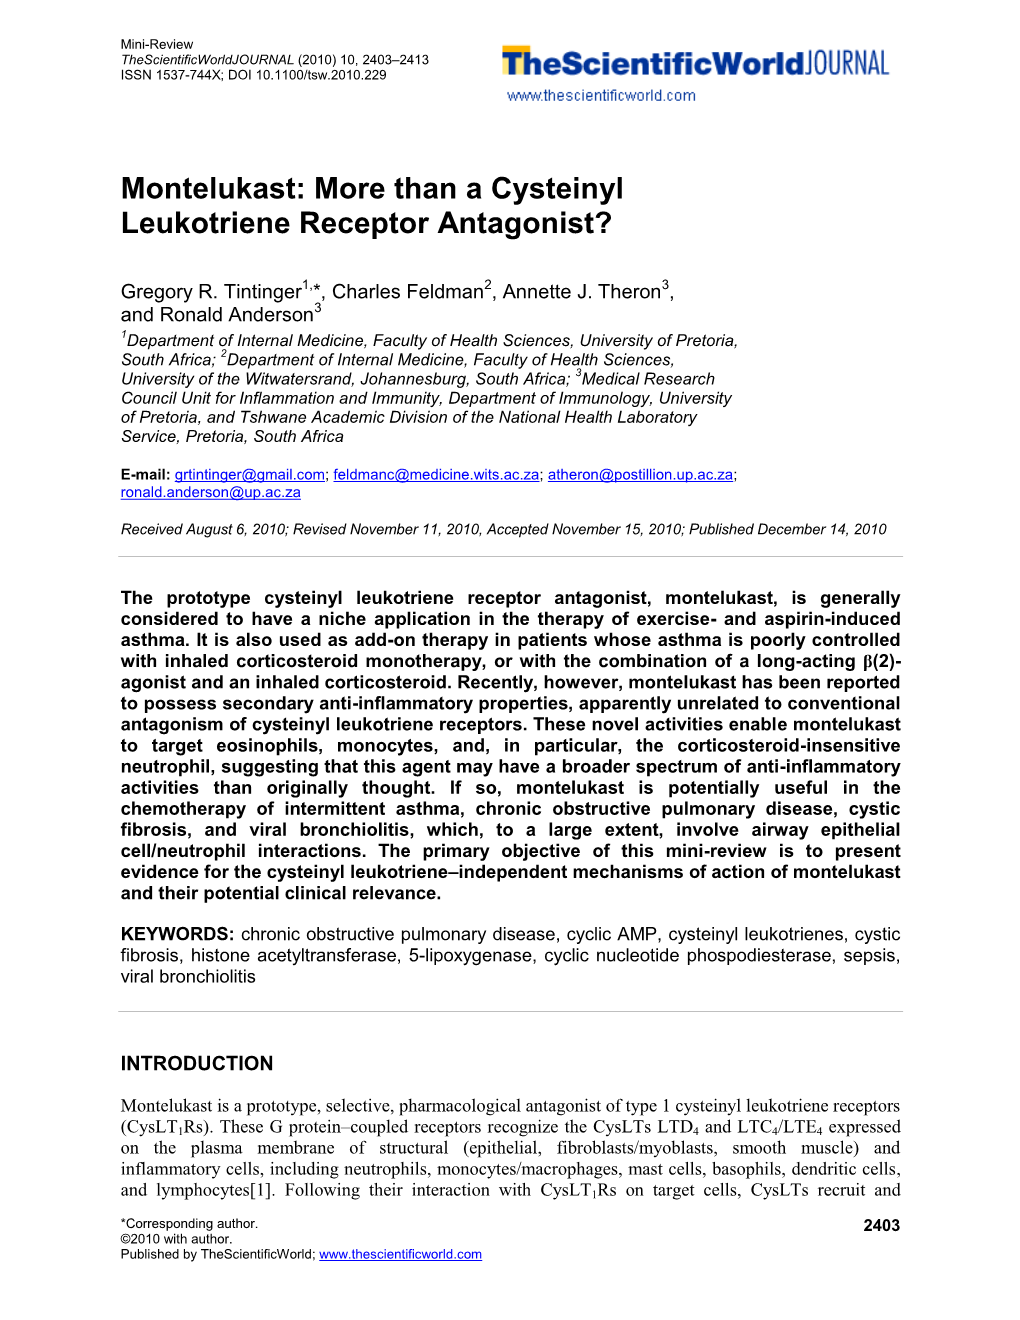 Montelukast: More Than a Cysteinyl Leukotriene Receptor Antagonist?